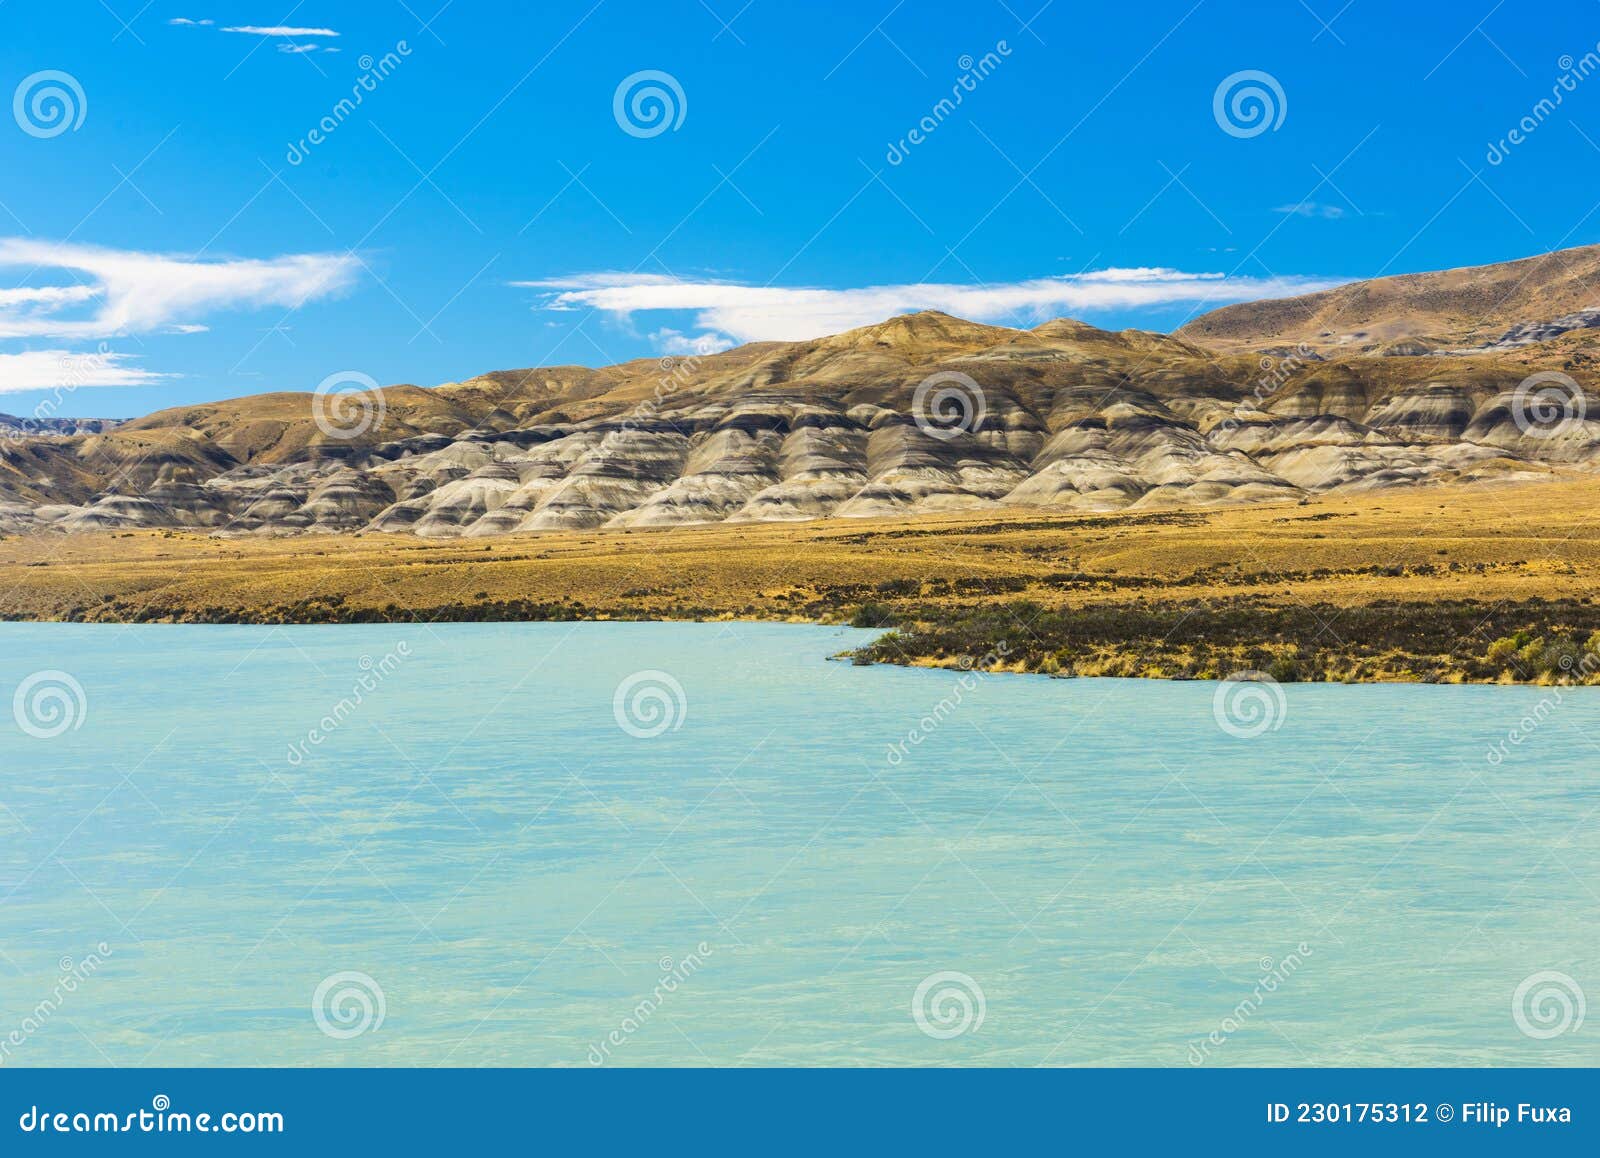 hills along river la leona in argentina